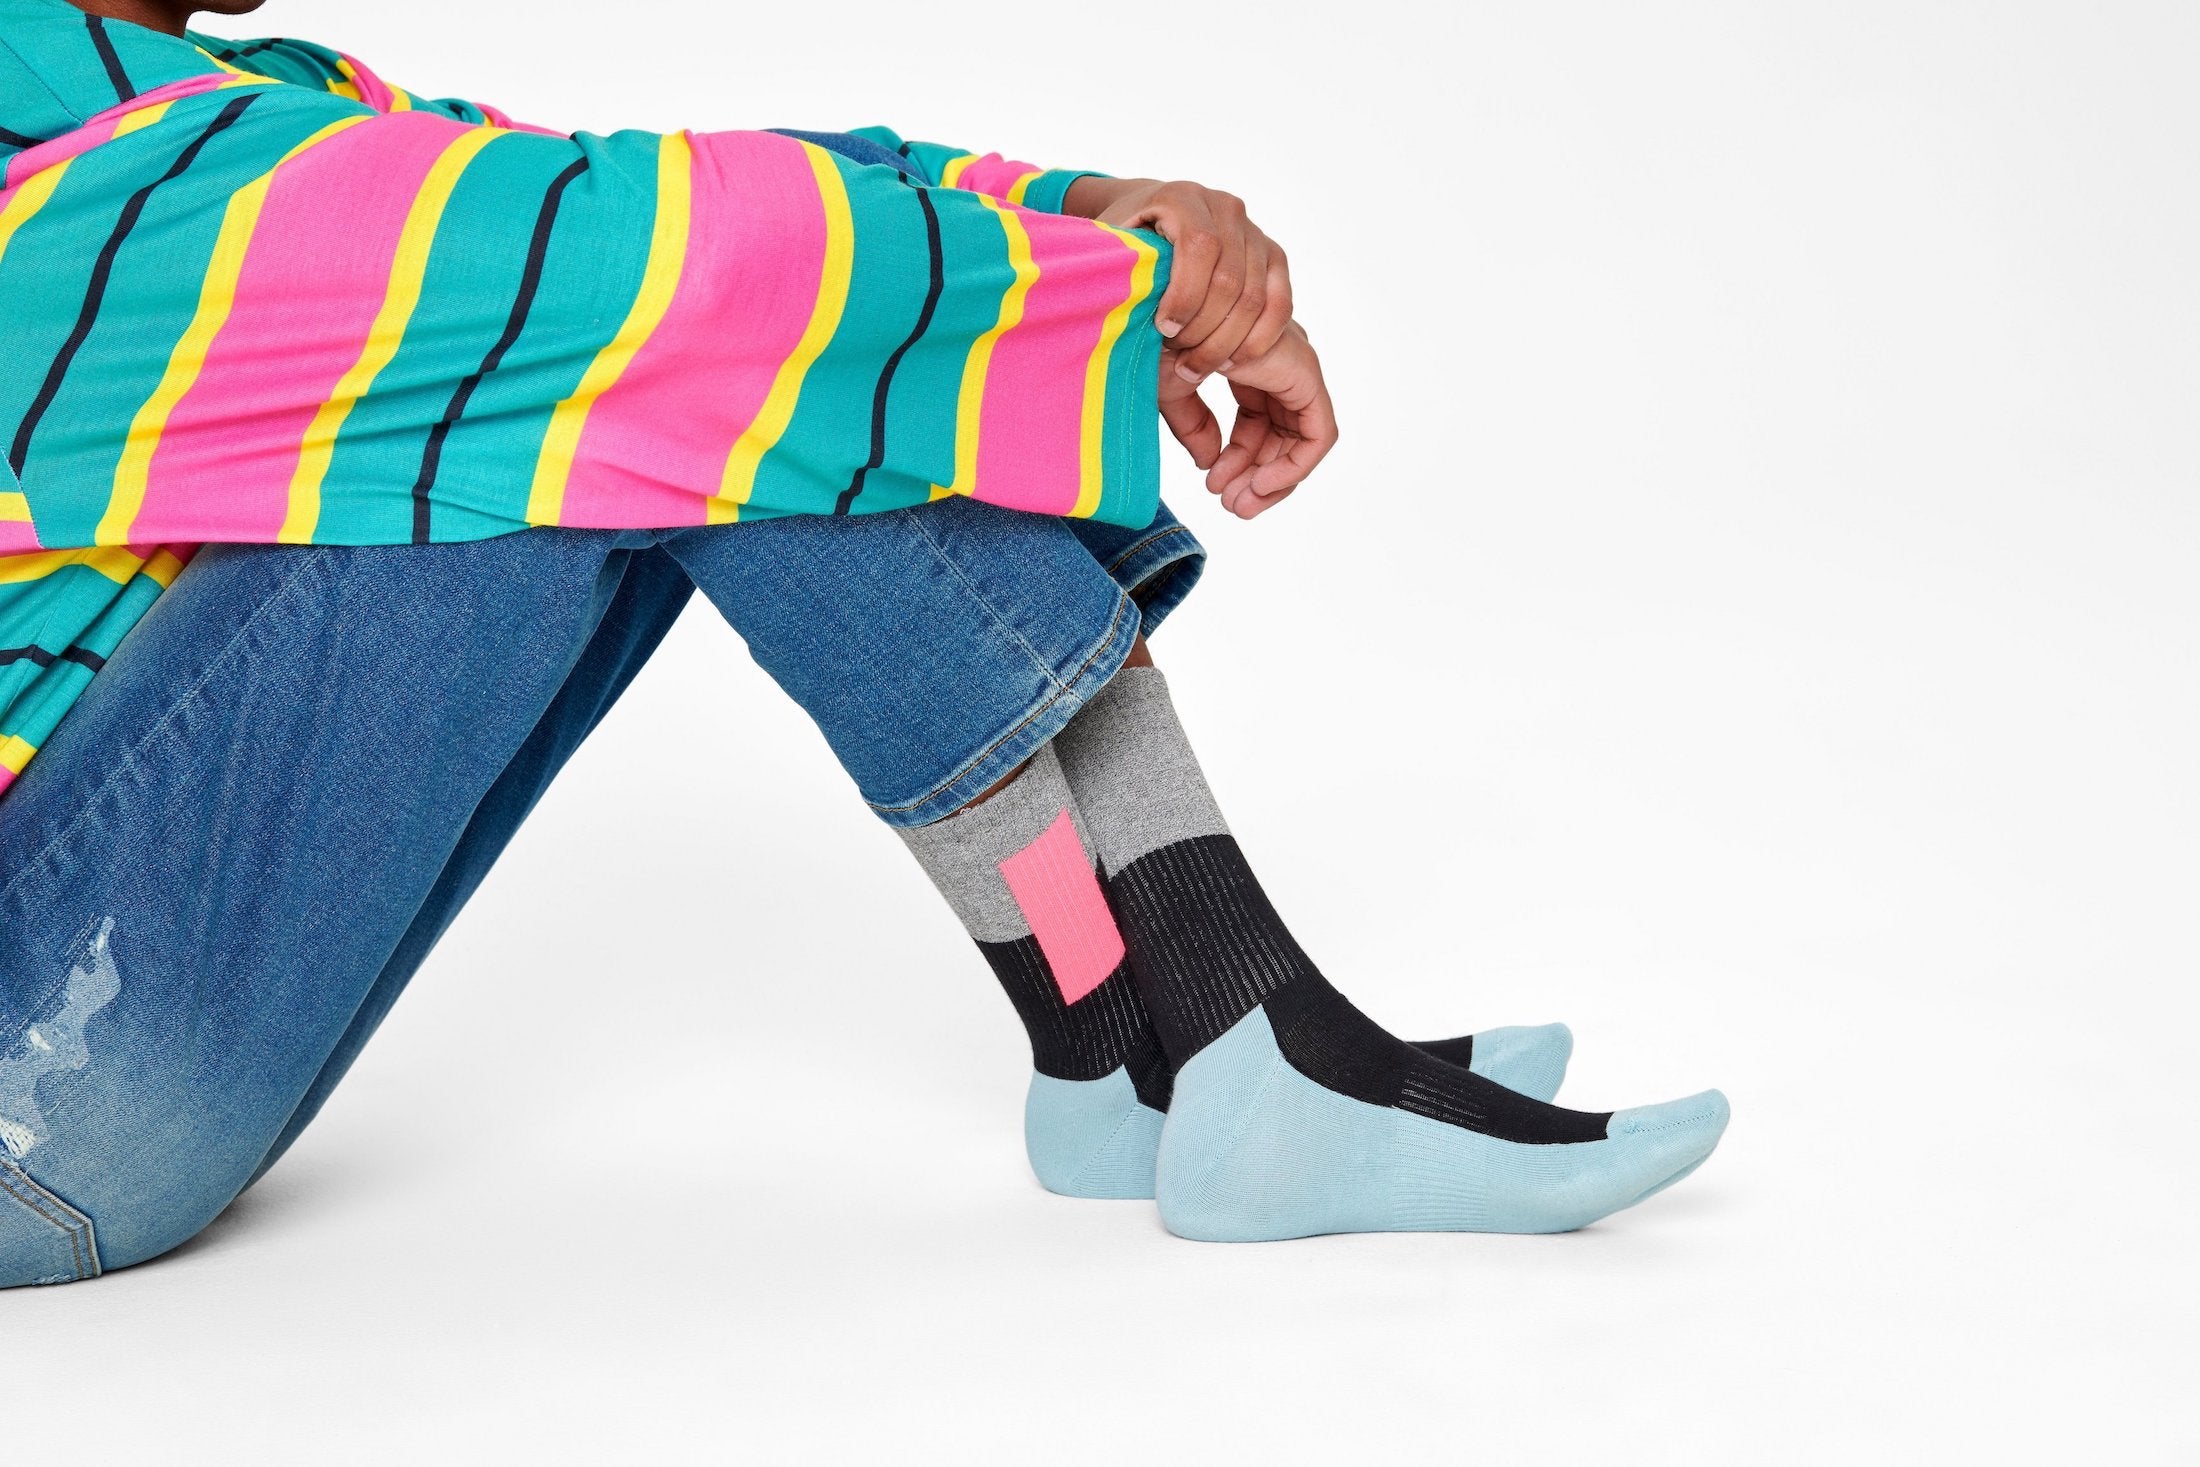 Modro-černé ponožky Happy Socks, vzor Blocked // KOLEKCE ATHLETIC